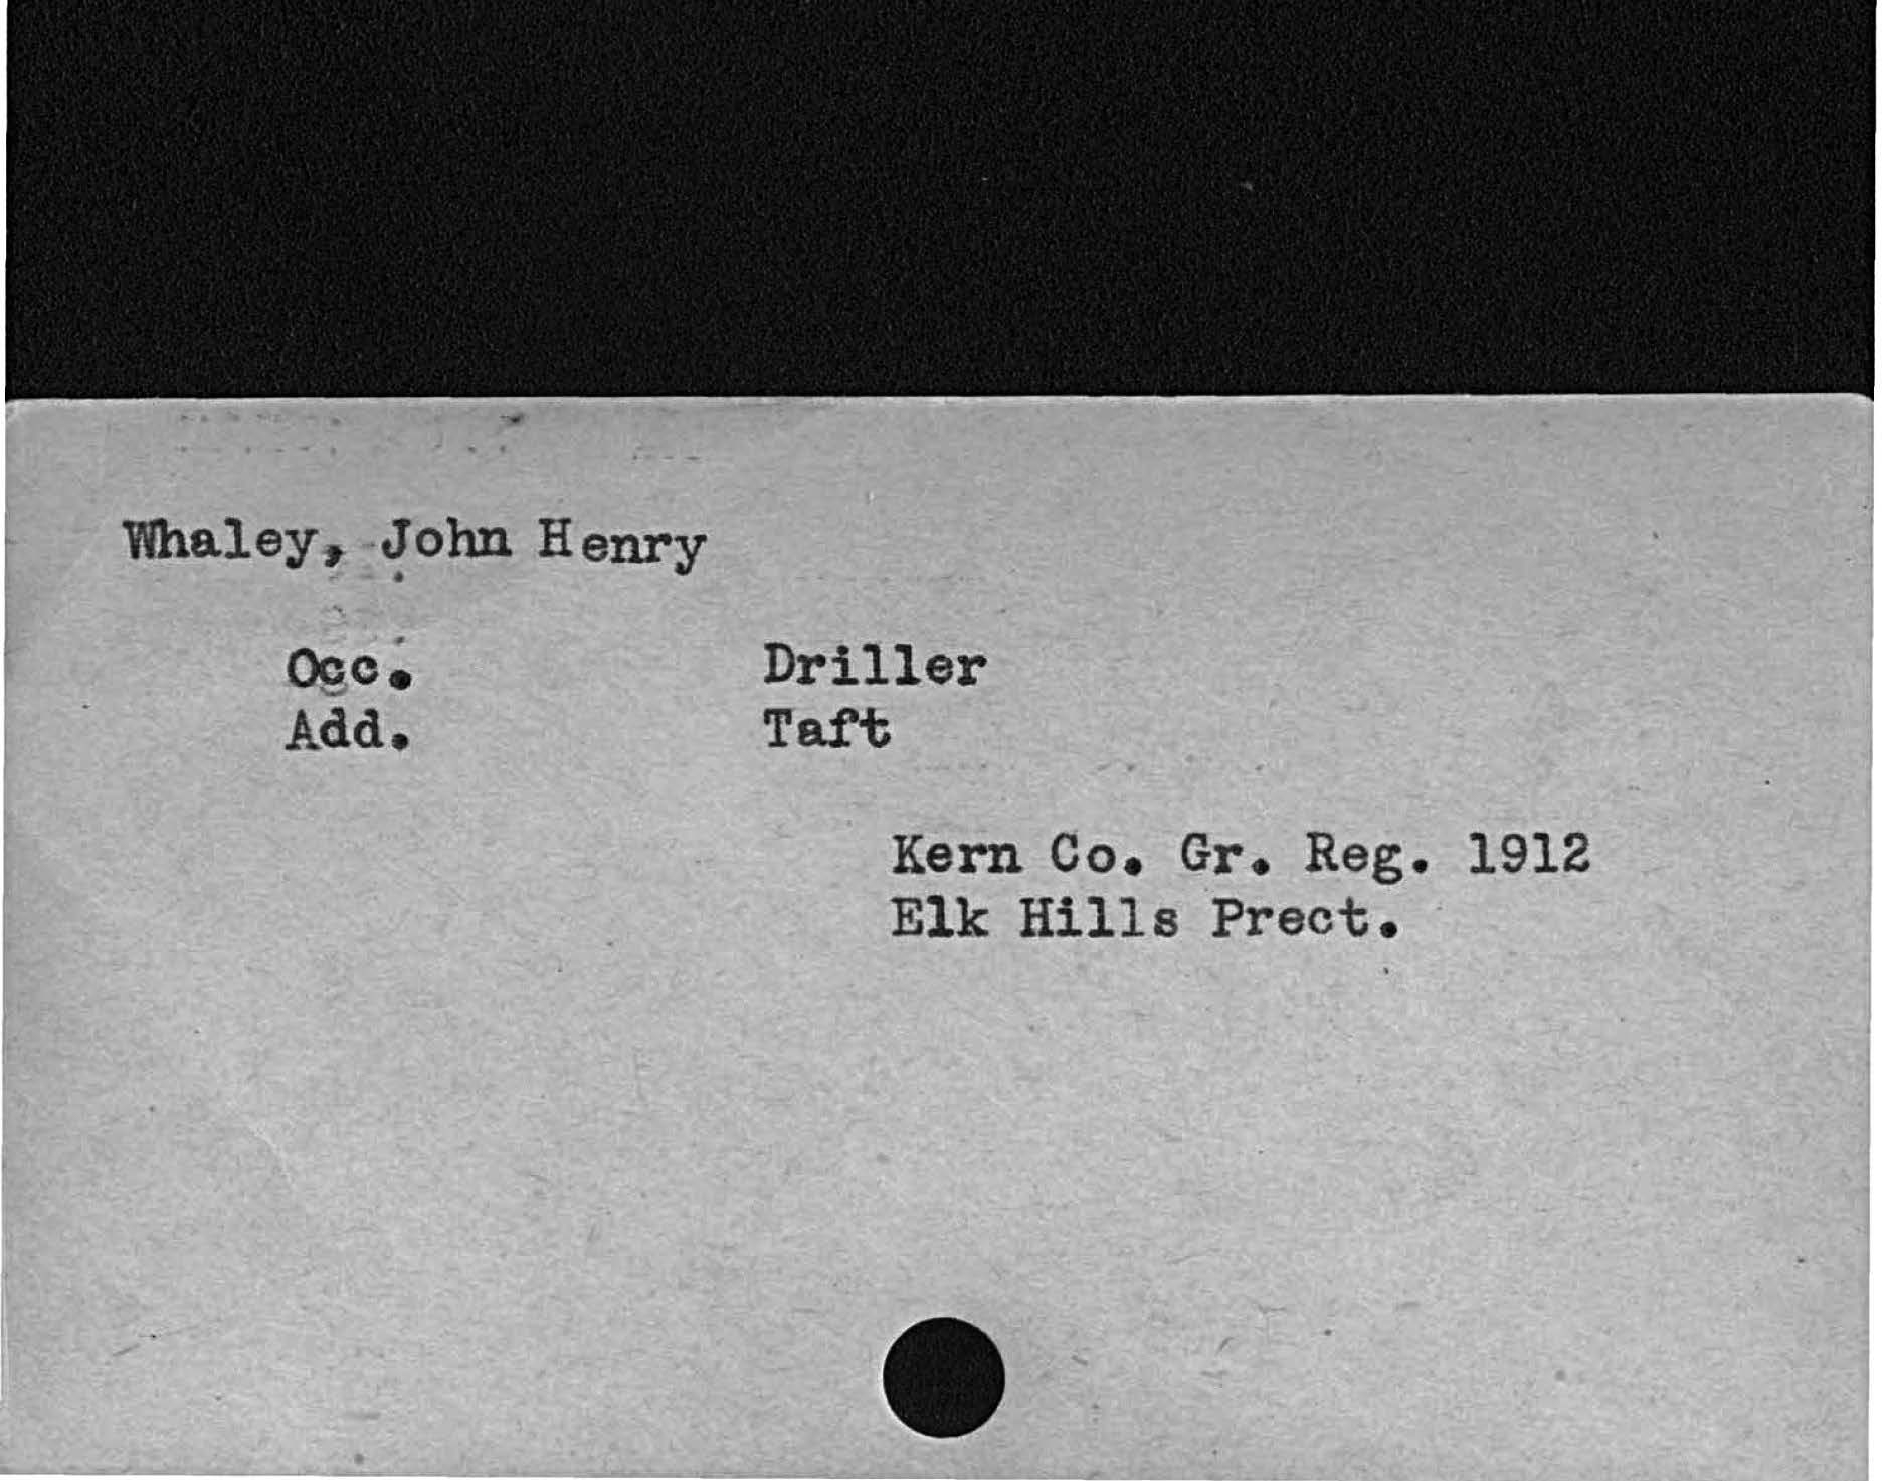 Whaley, John HenryOcc. DrillerAdd. TattKern Co. r. Reg. 1912Elk Hills Prect.41